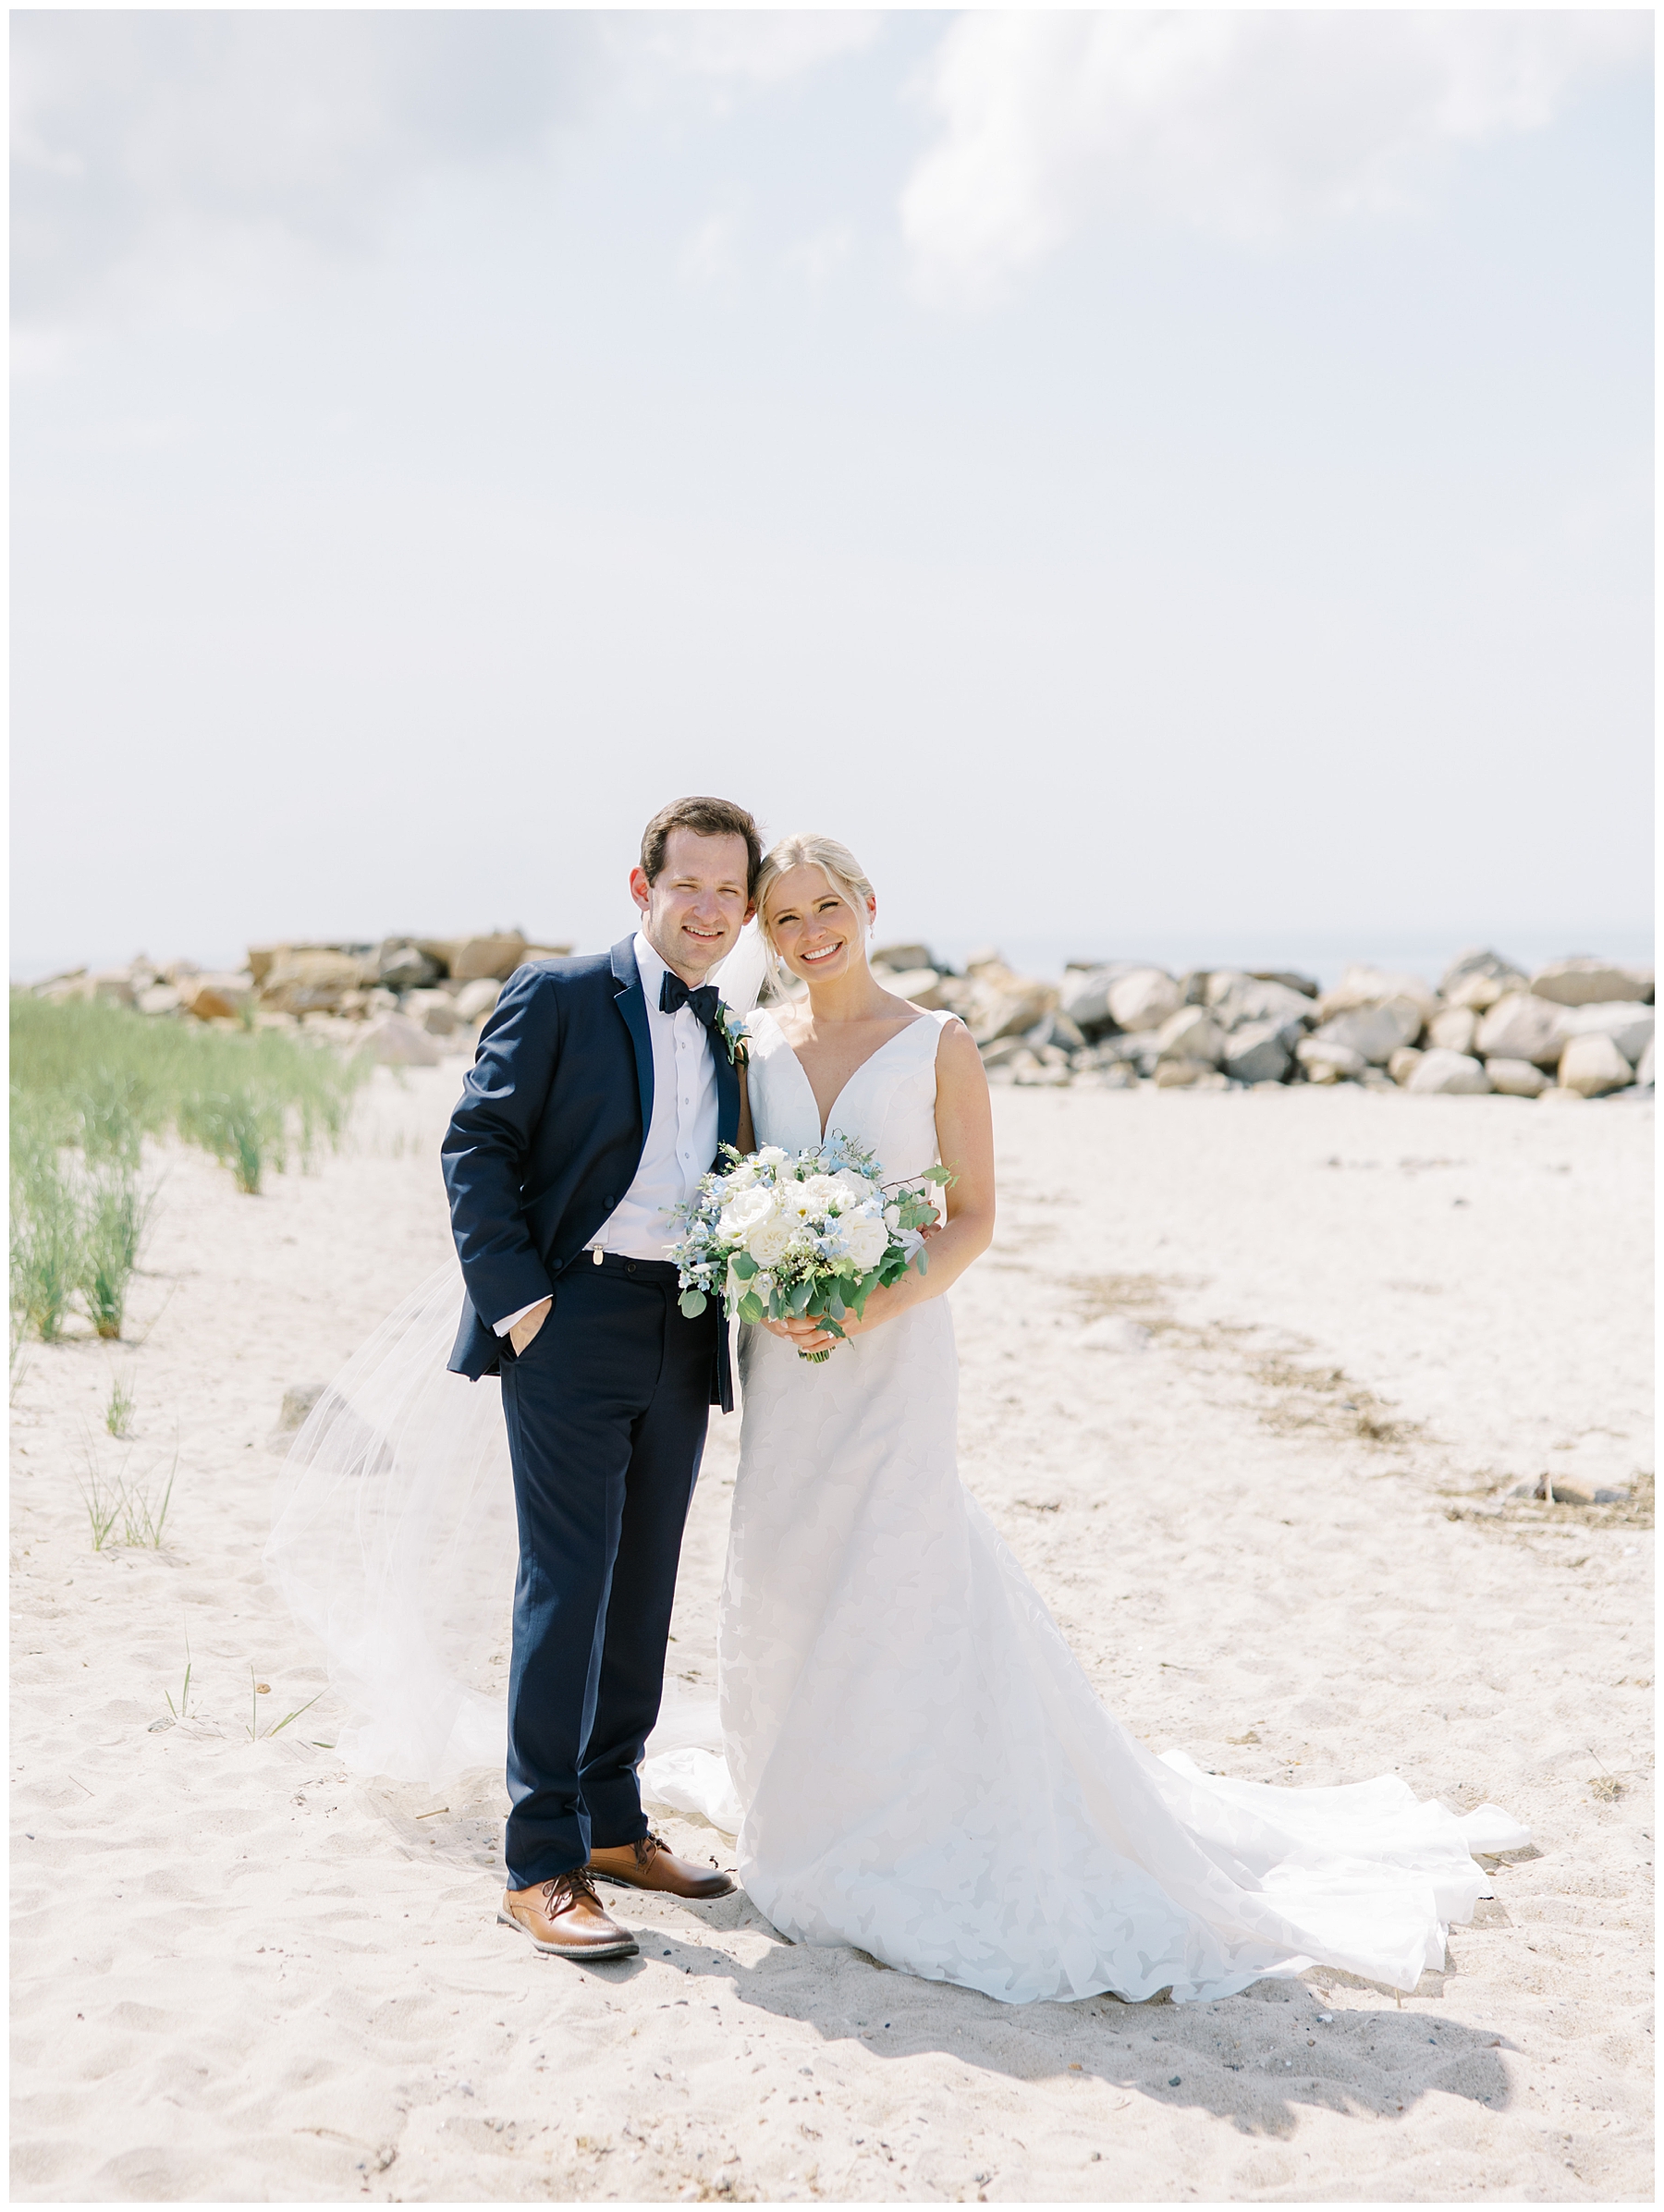 Dreamy Cape Cod Wedding portraits at the beach